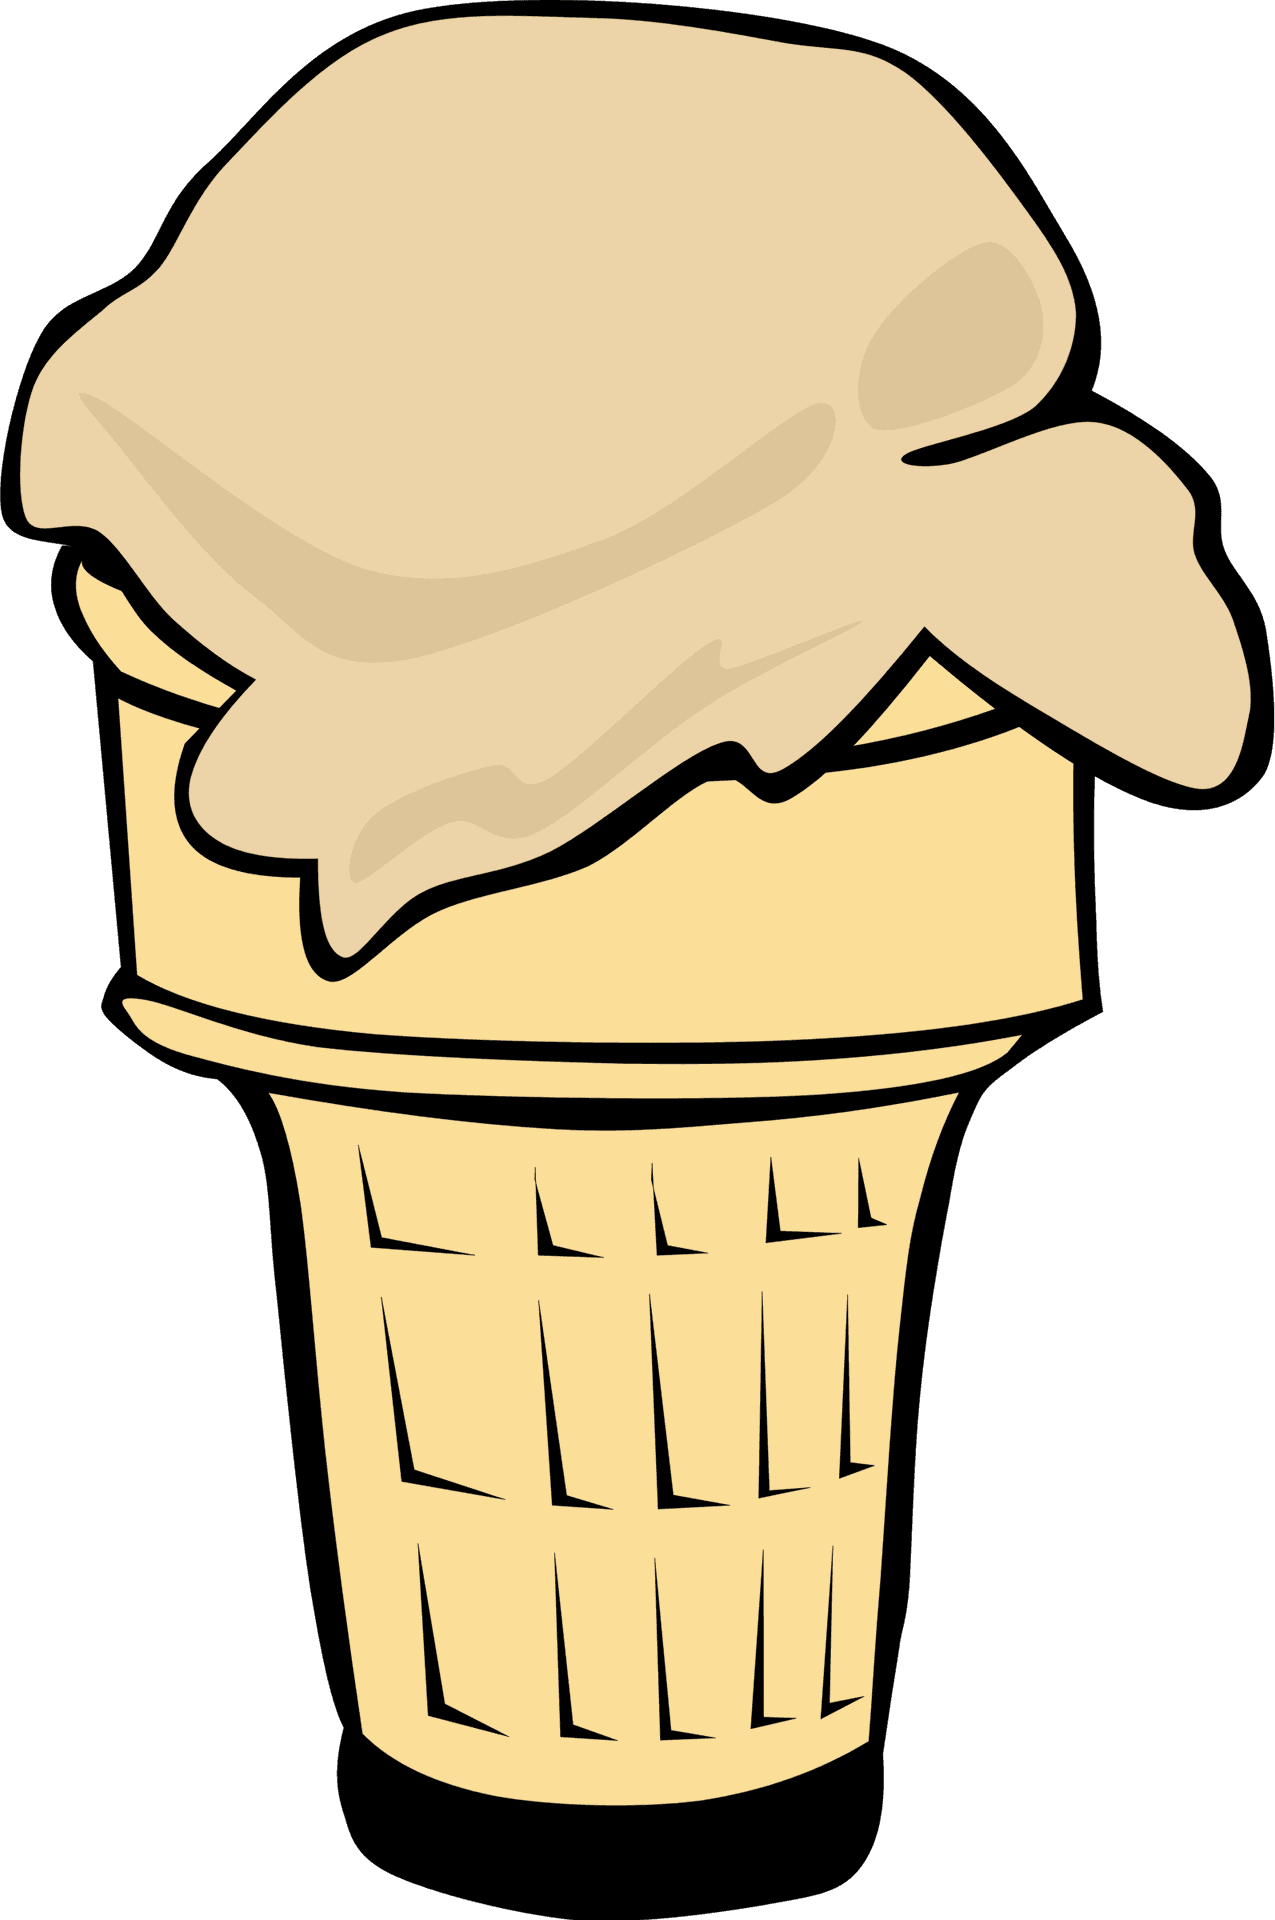 Melting Vanilla Ice Cream Cone Illustration PNG